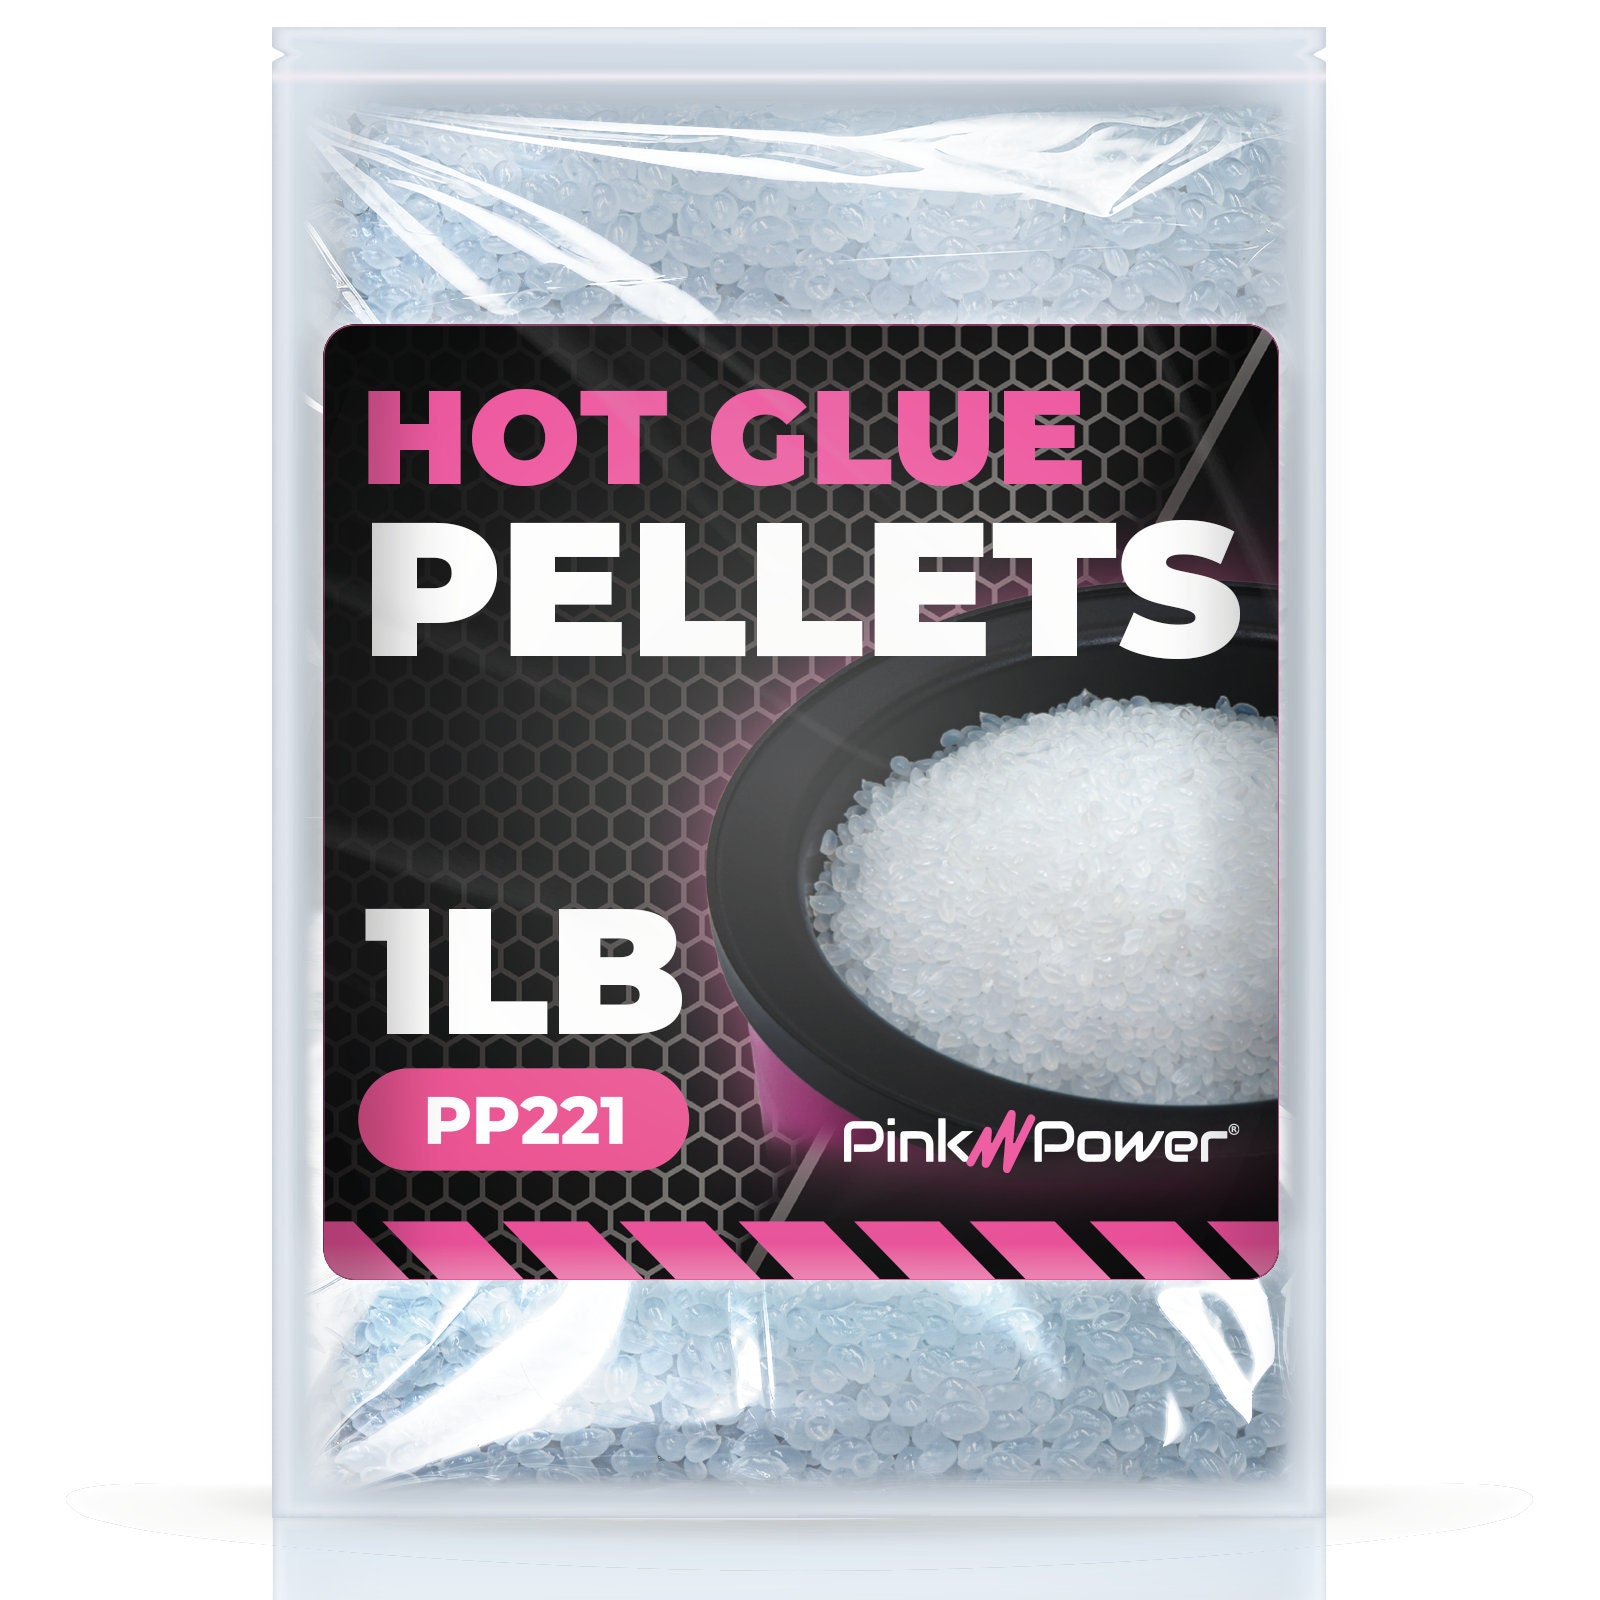 Hot Glue Pots and Skillets